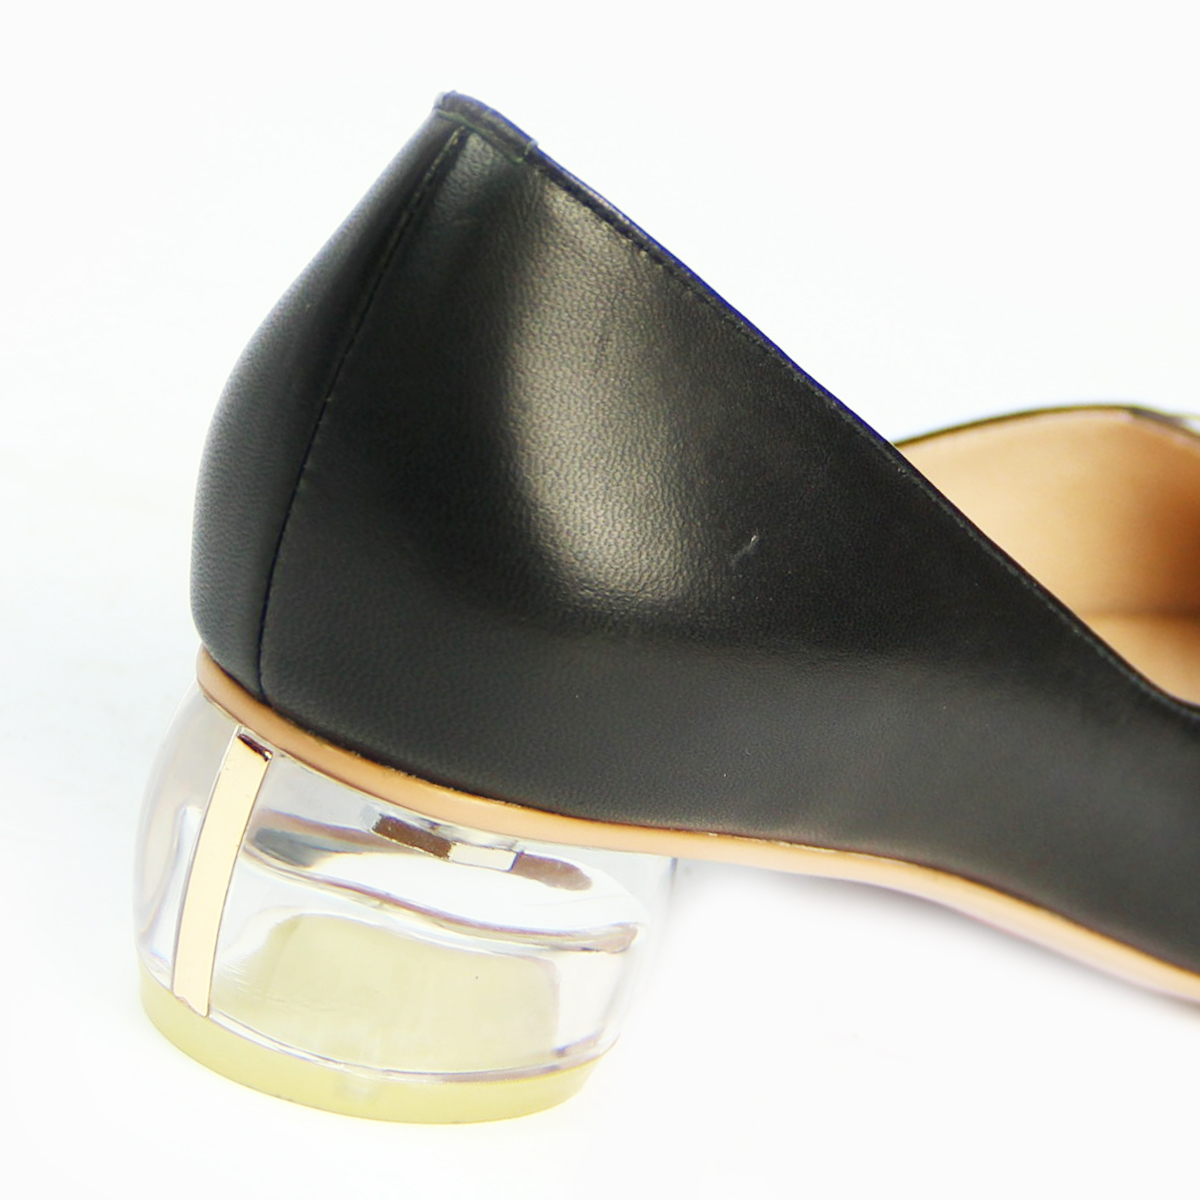 Каталог Туфли классические женские Фабрика обуви